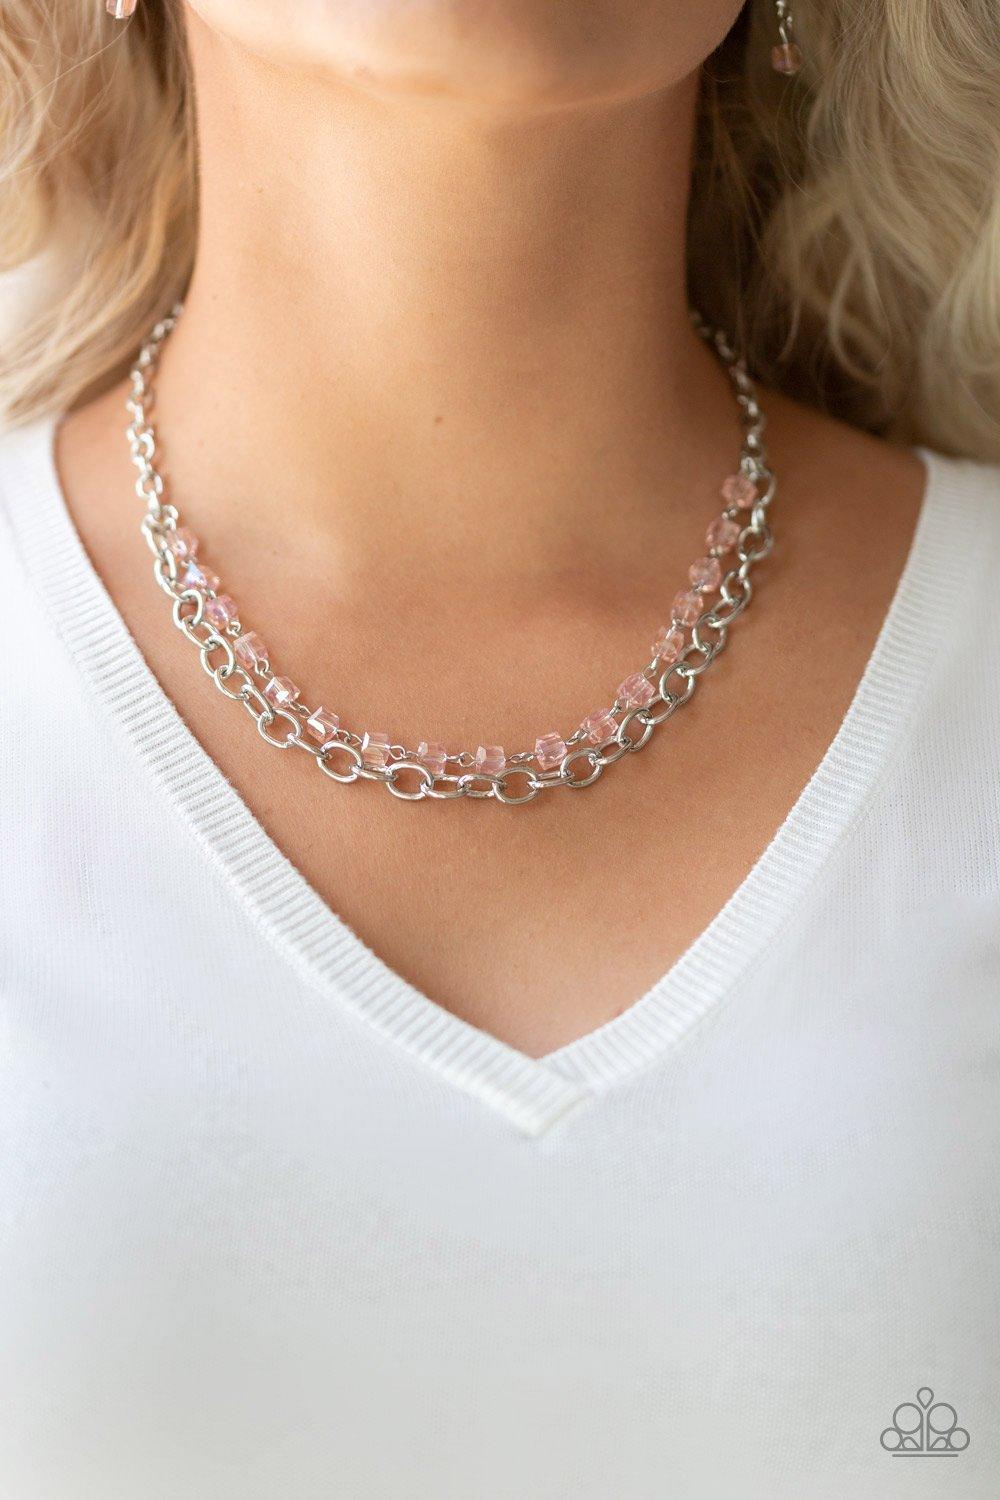 Paparazzi Accessories-Block Party Princess - Pink Necklace